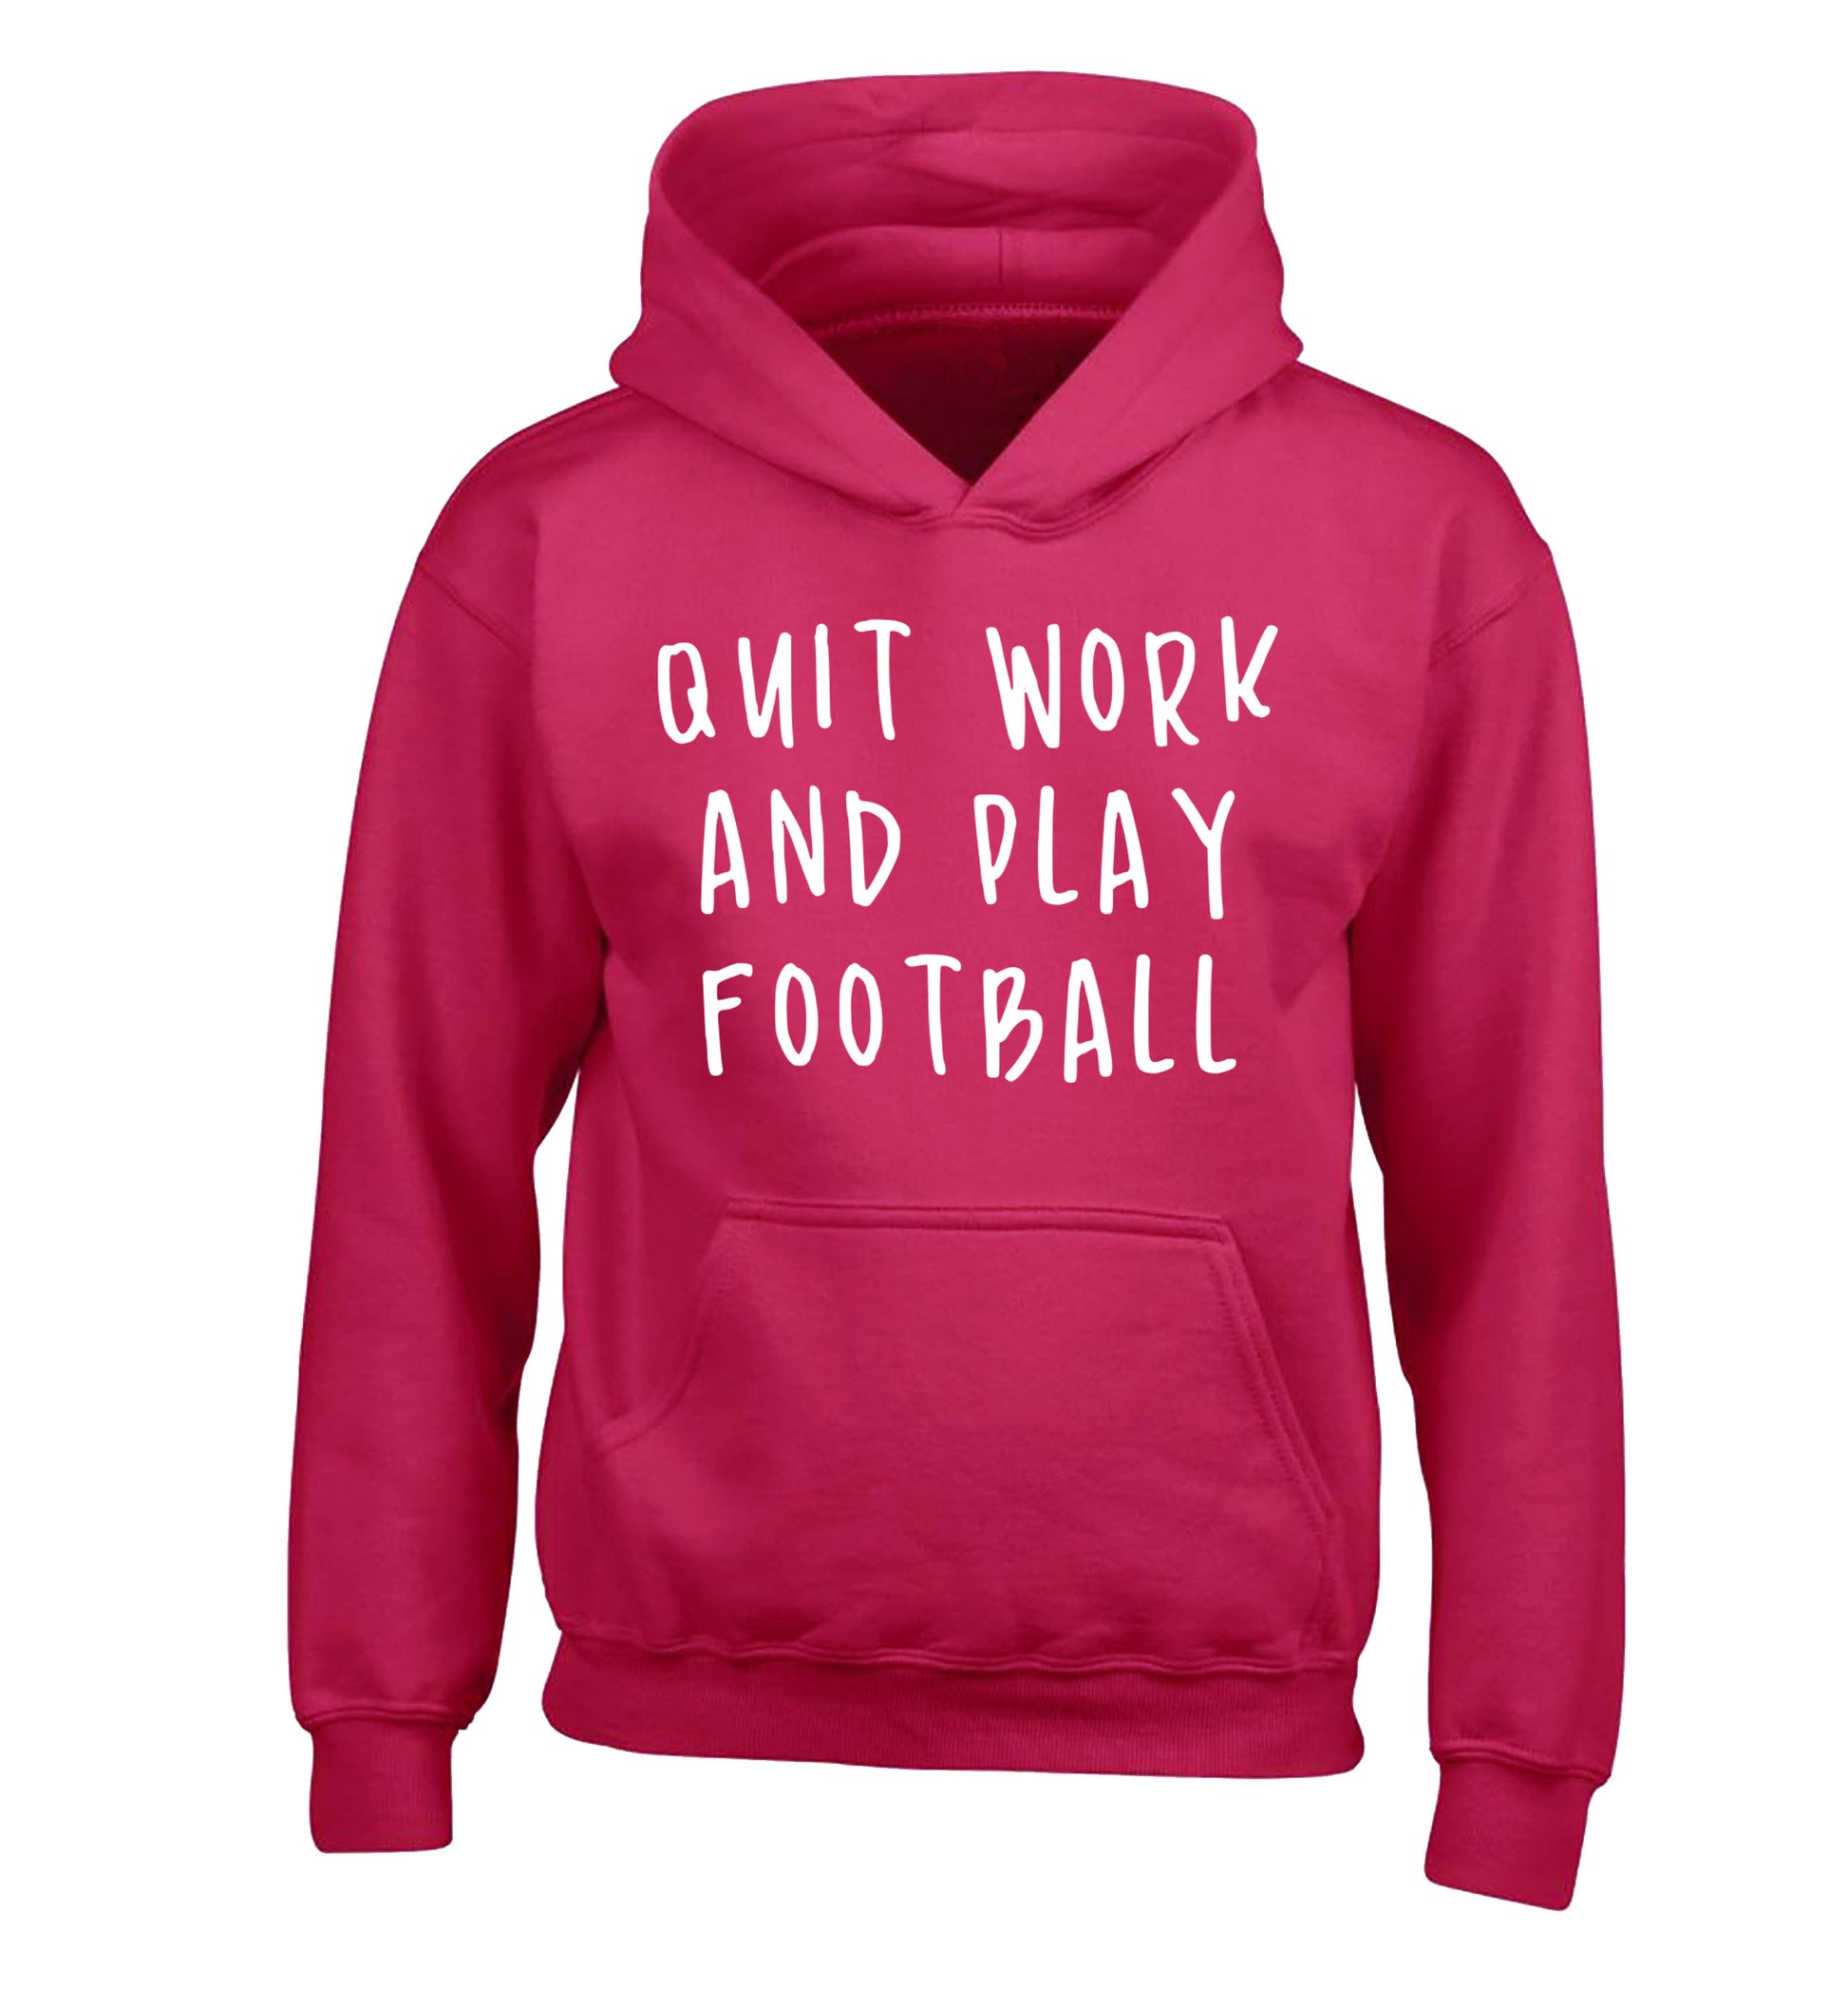 Quit work play football children's pink hoodie 12-14 Years